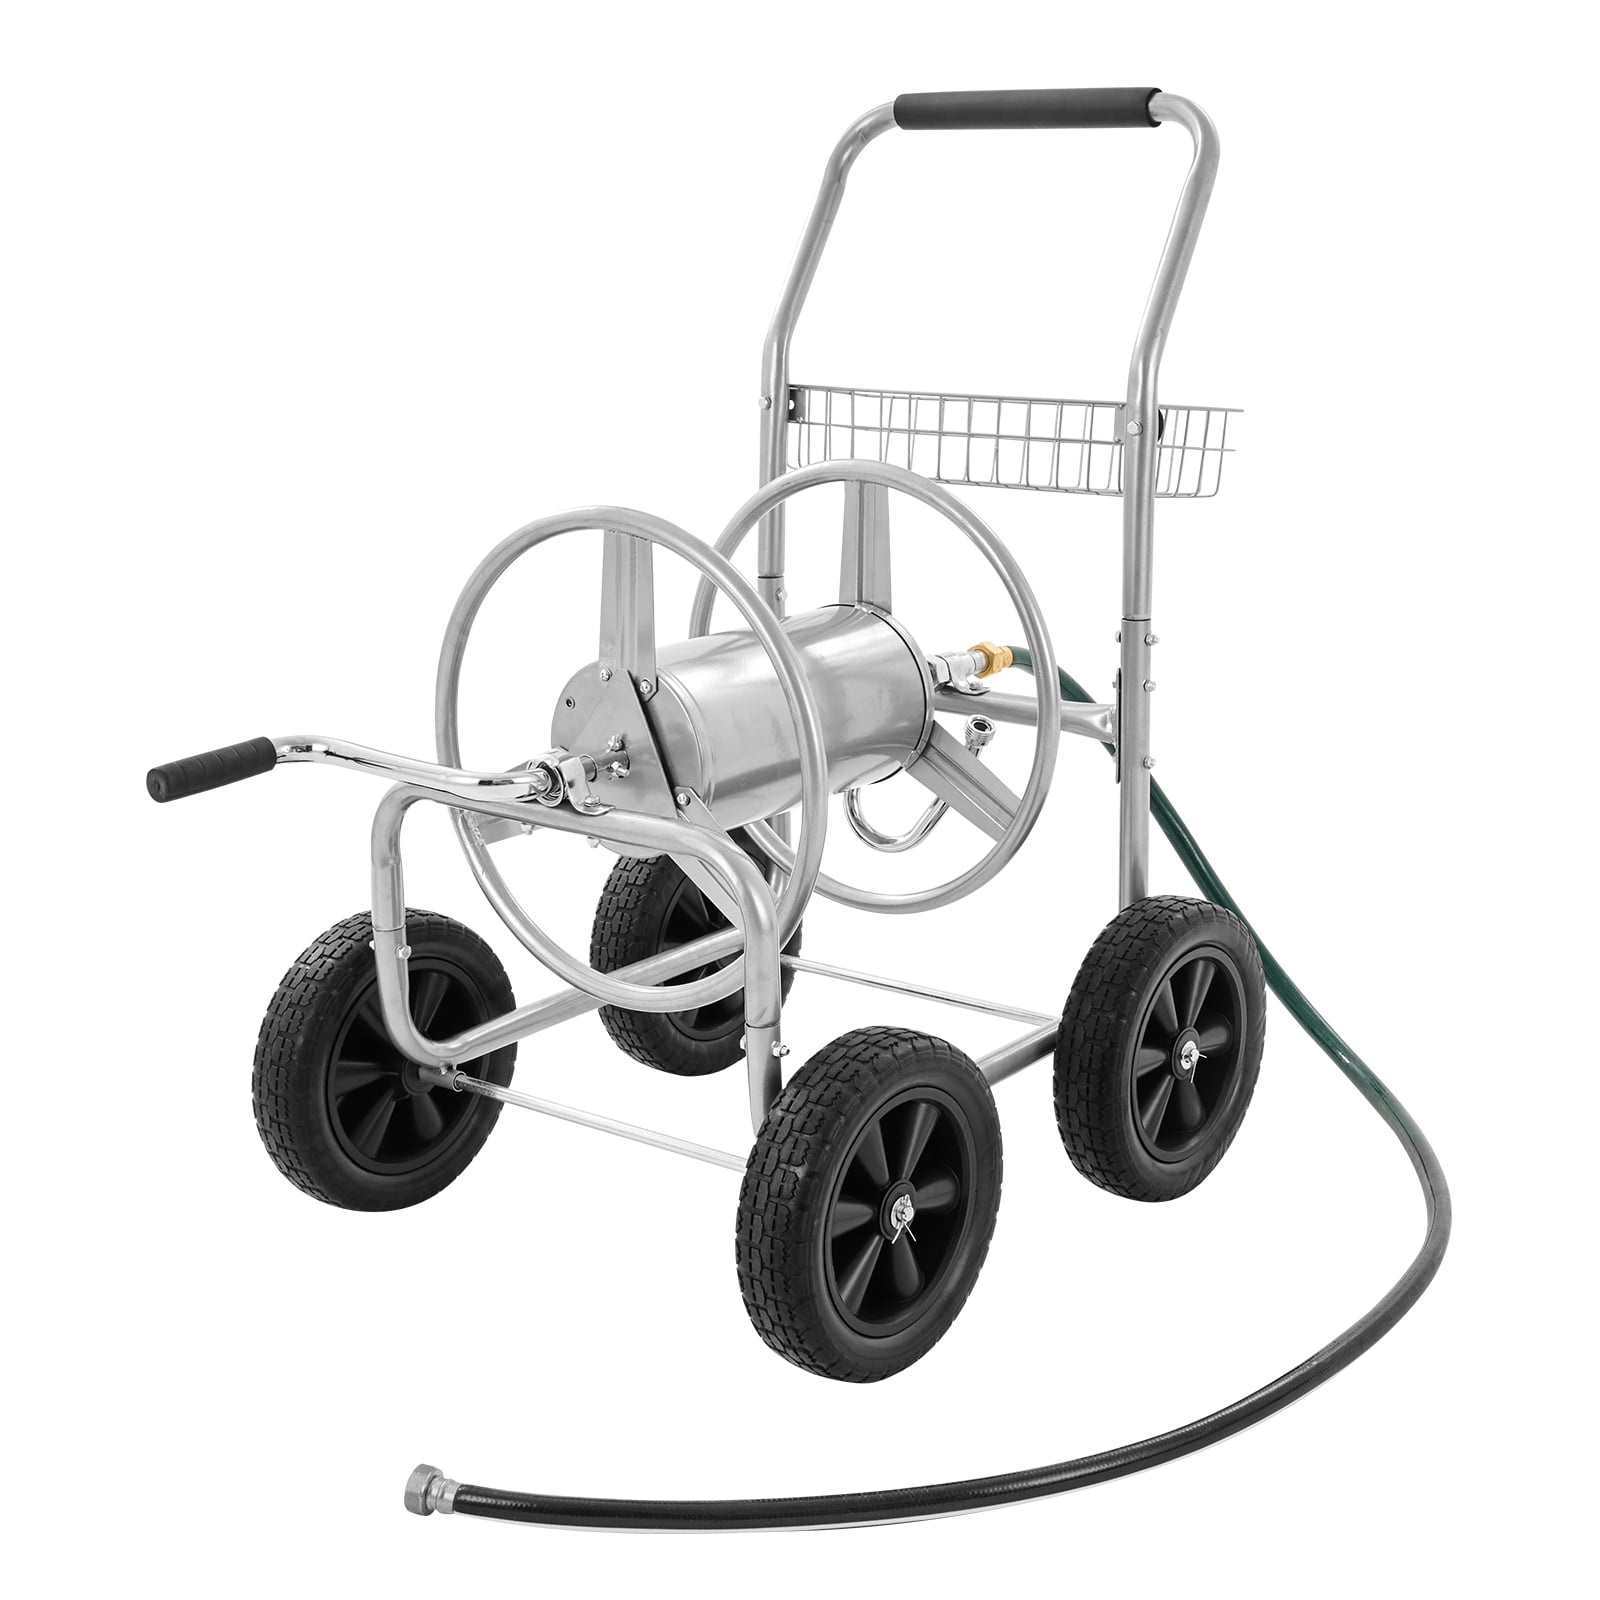 YRLLENSDAN Garden Hose Reel Cart with Wheels, Holds 300-Feet of 5